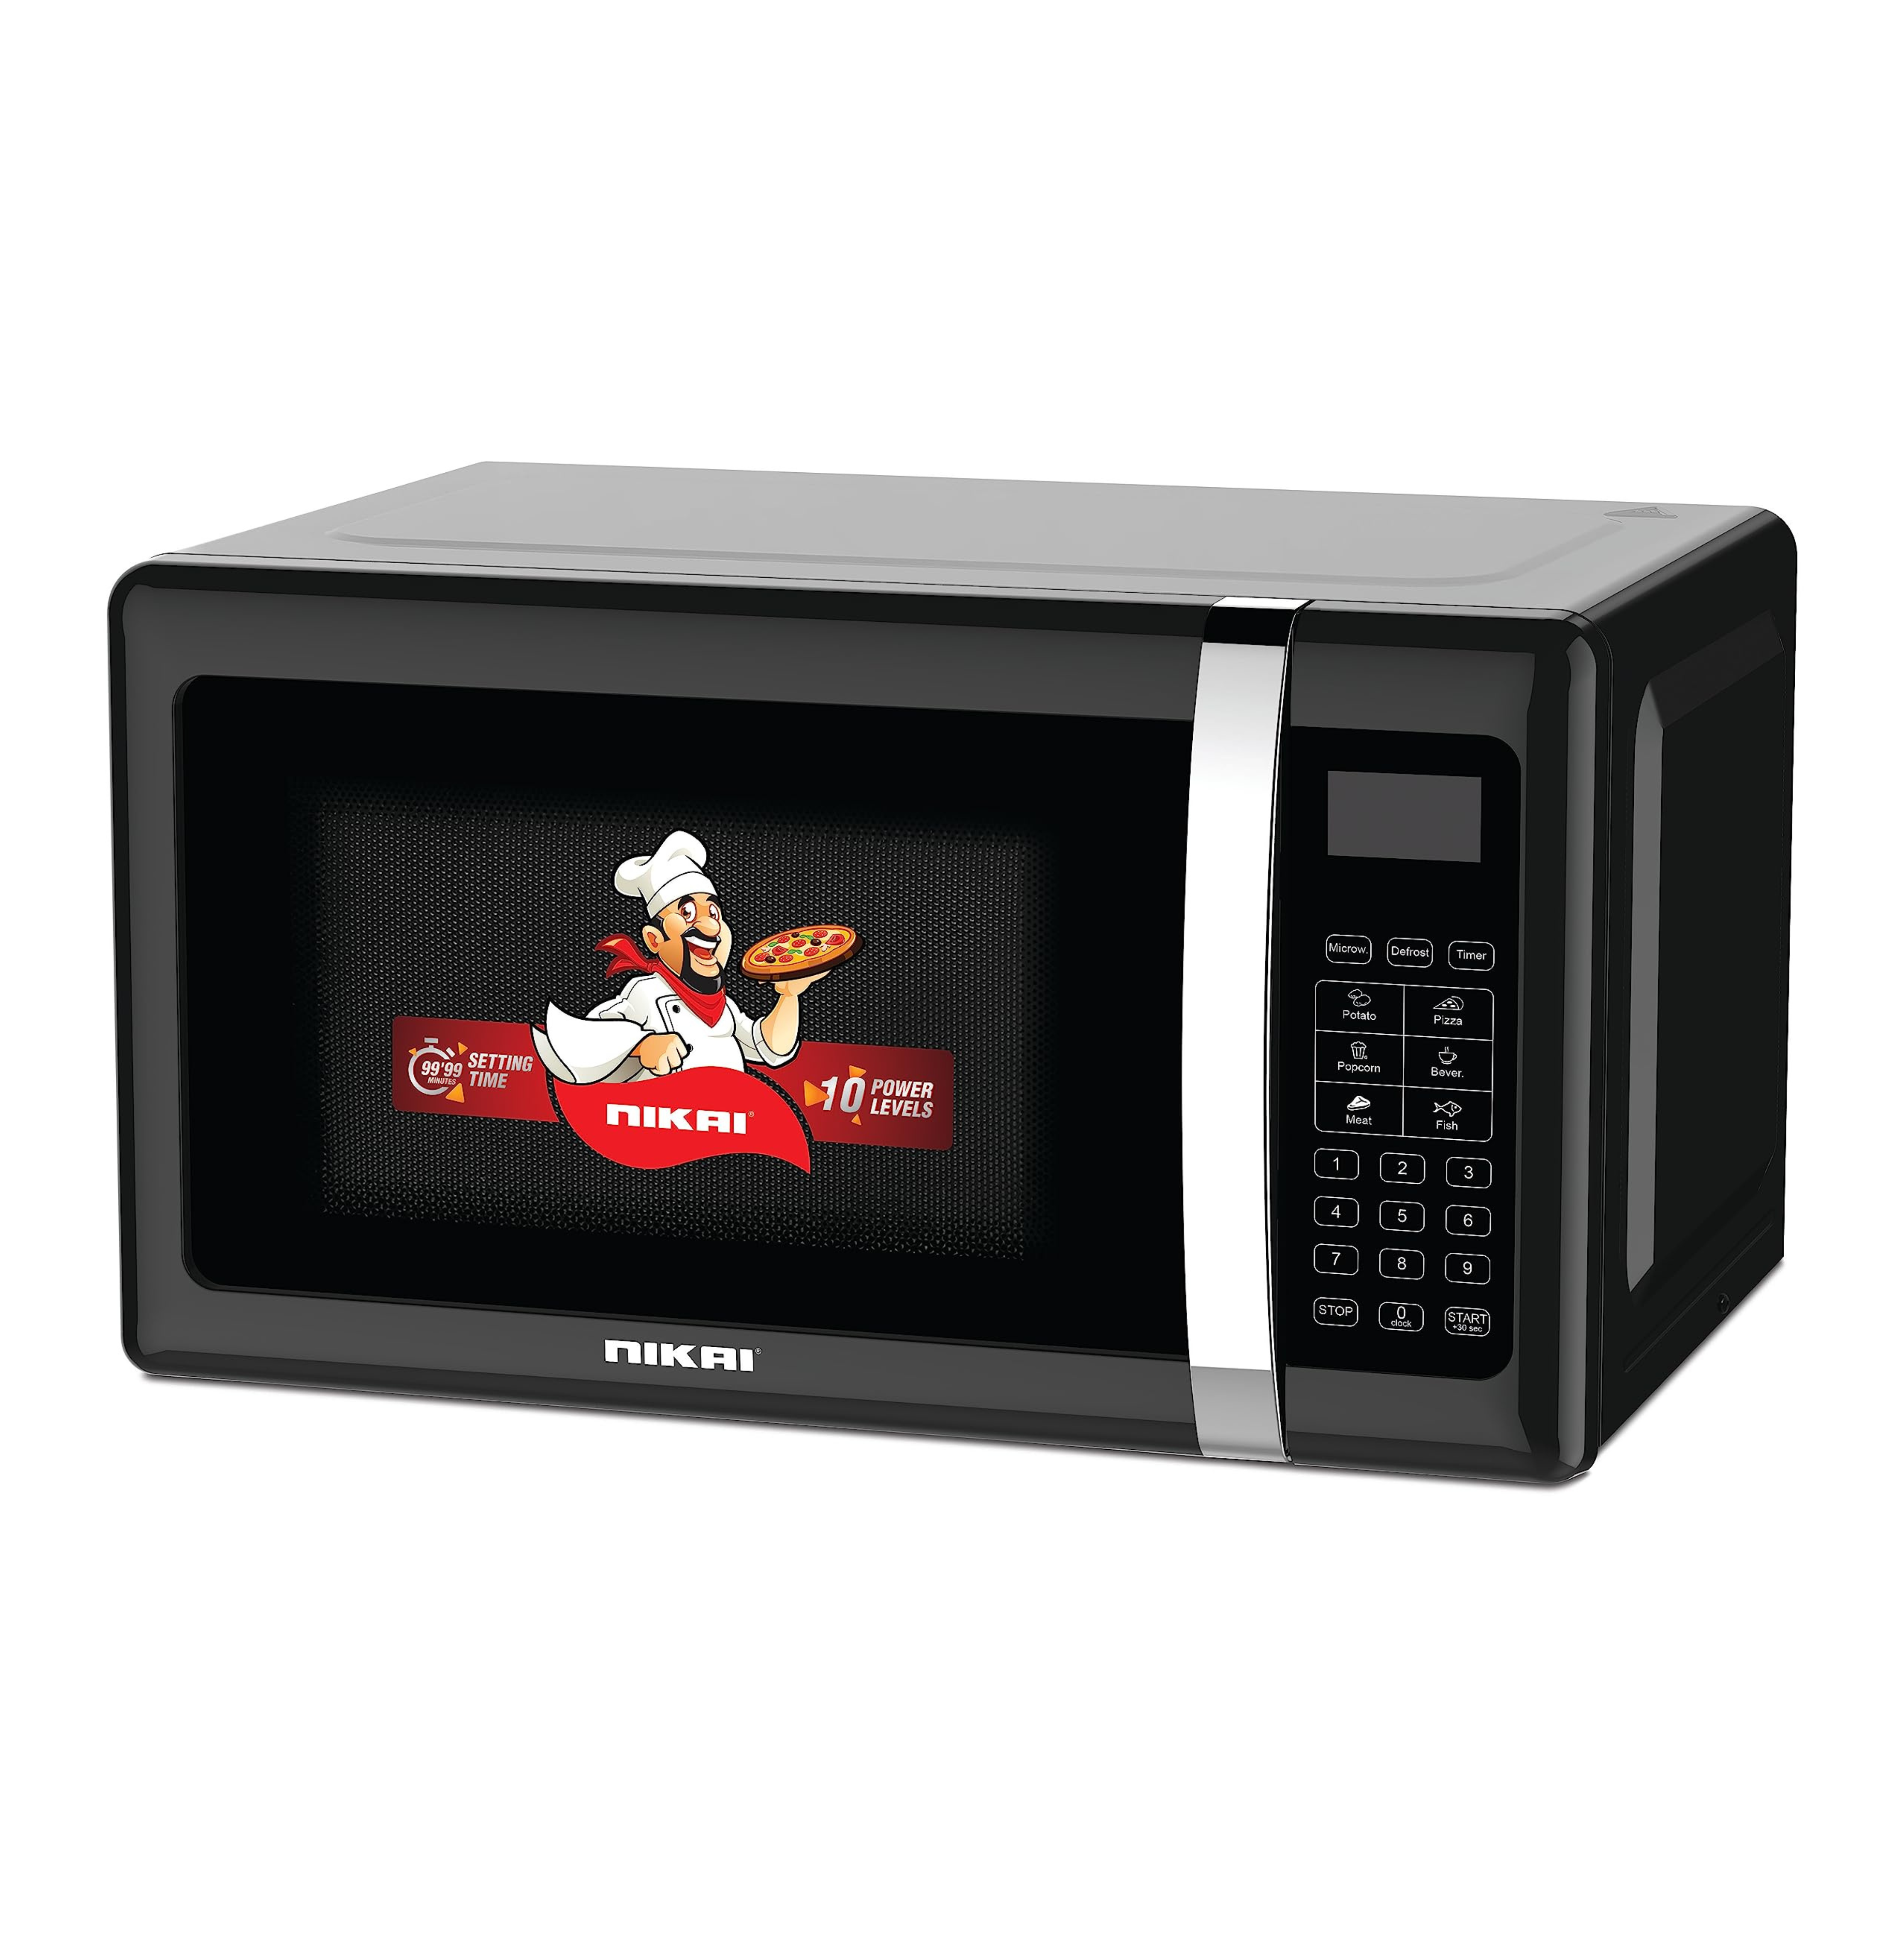 Nikai 20 Liter 700W Digital Microwave Oven with Mechanical Knob Controls| Model No NMO2010DBX with 2 Years Warranty